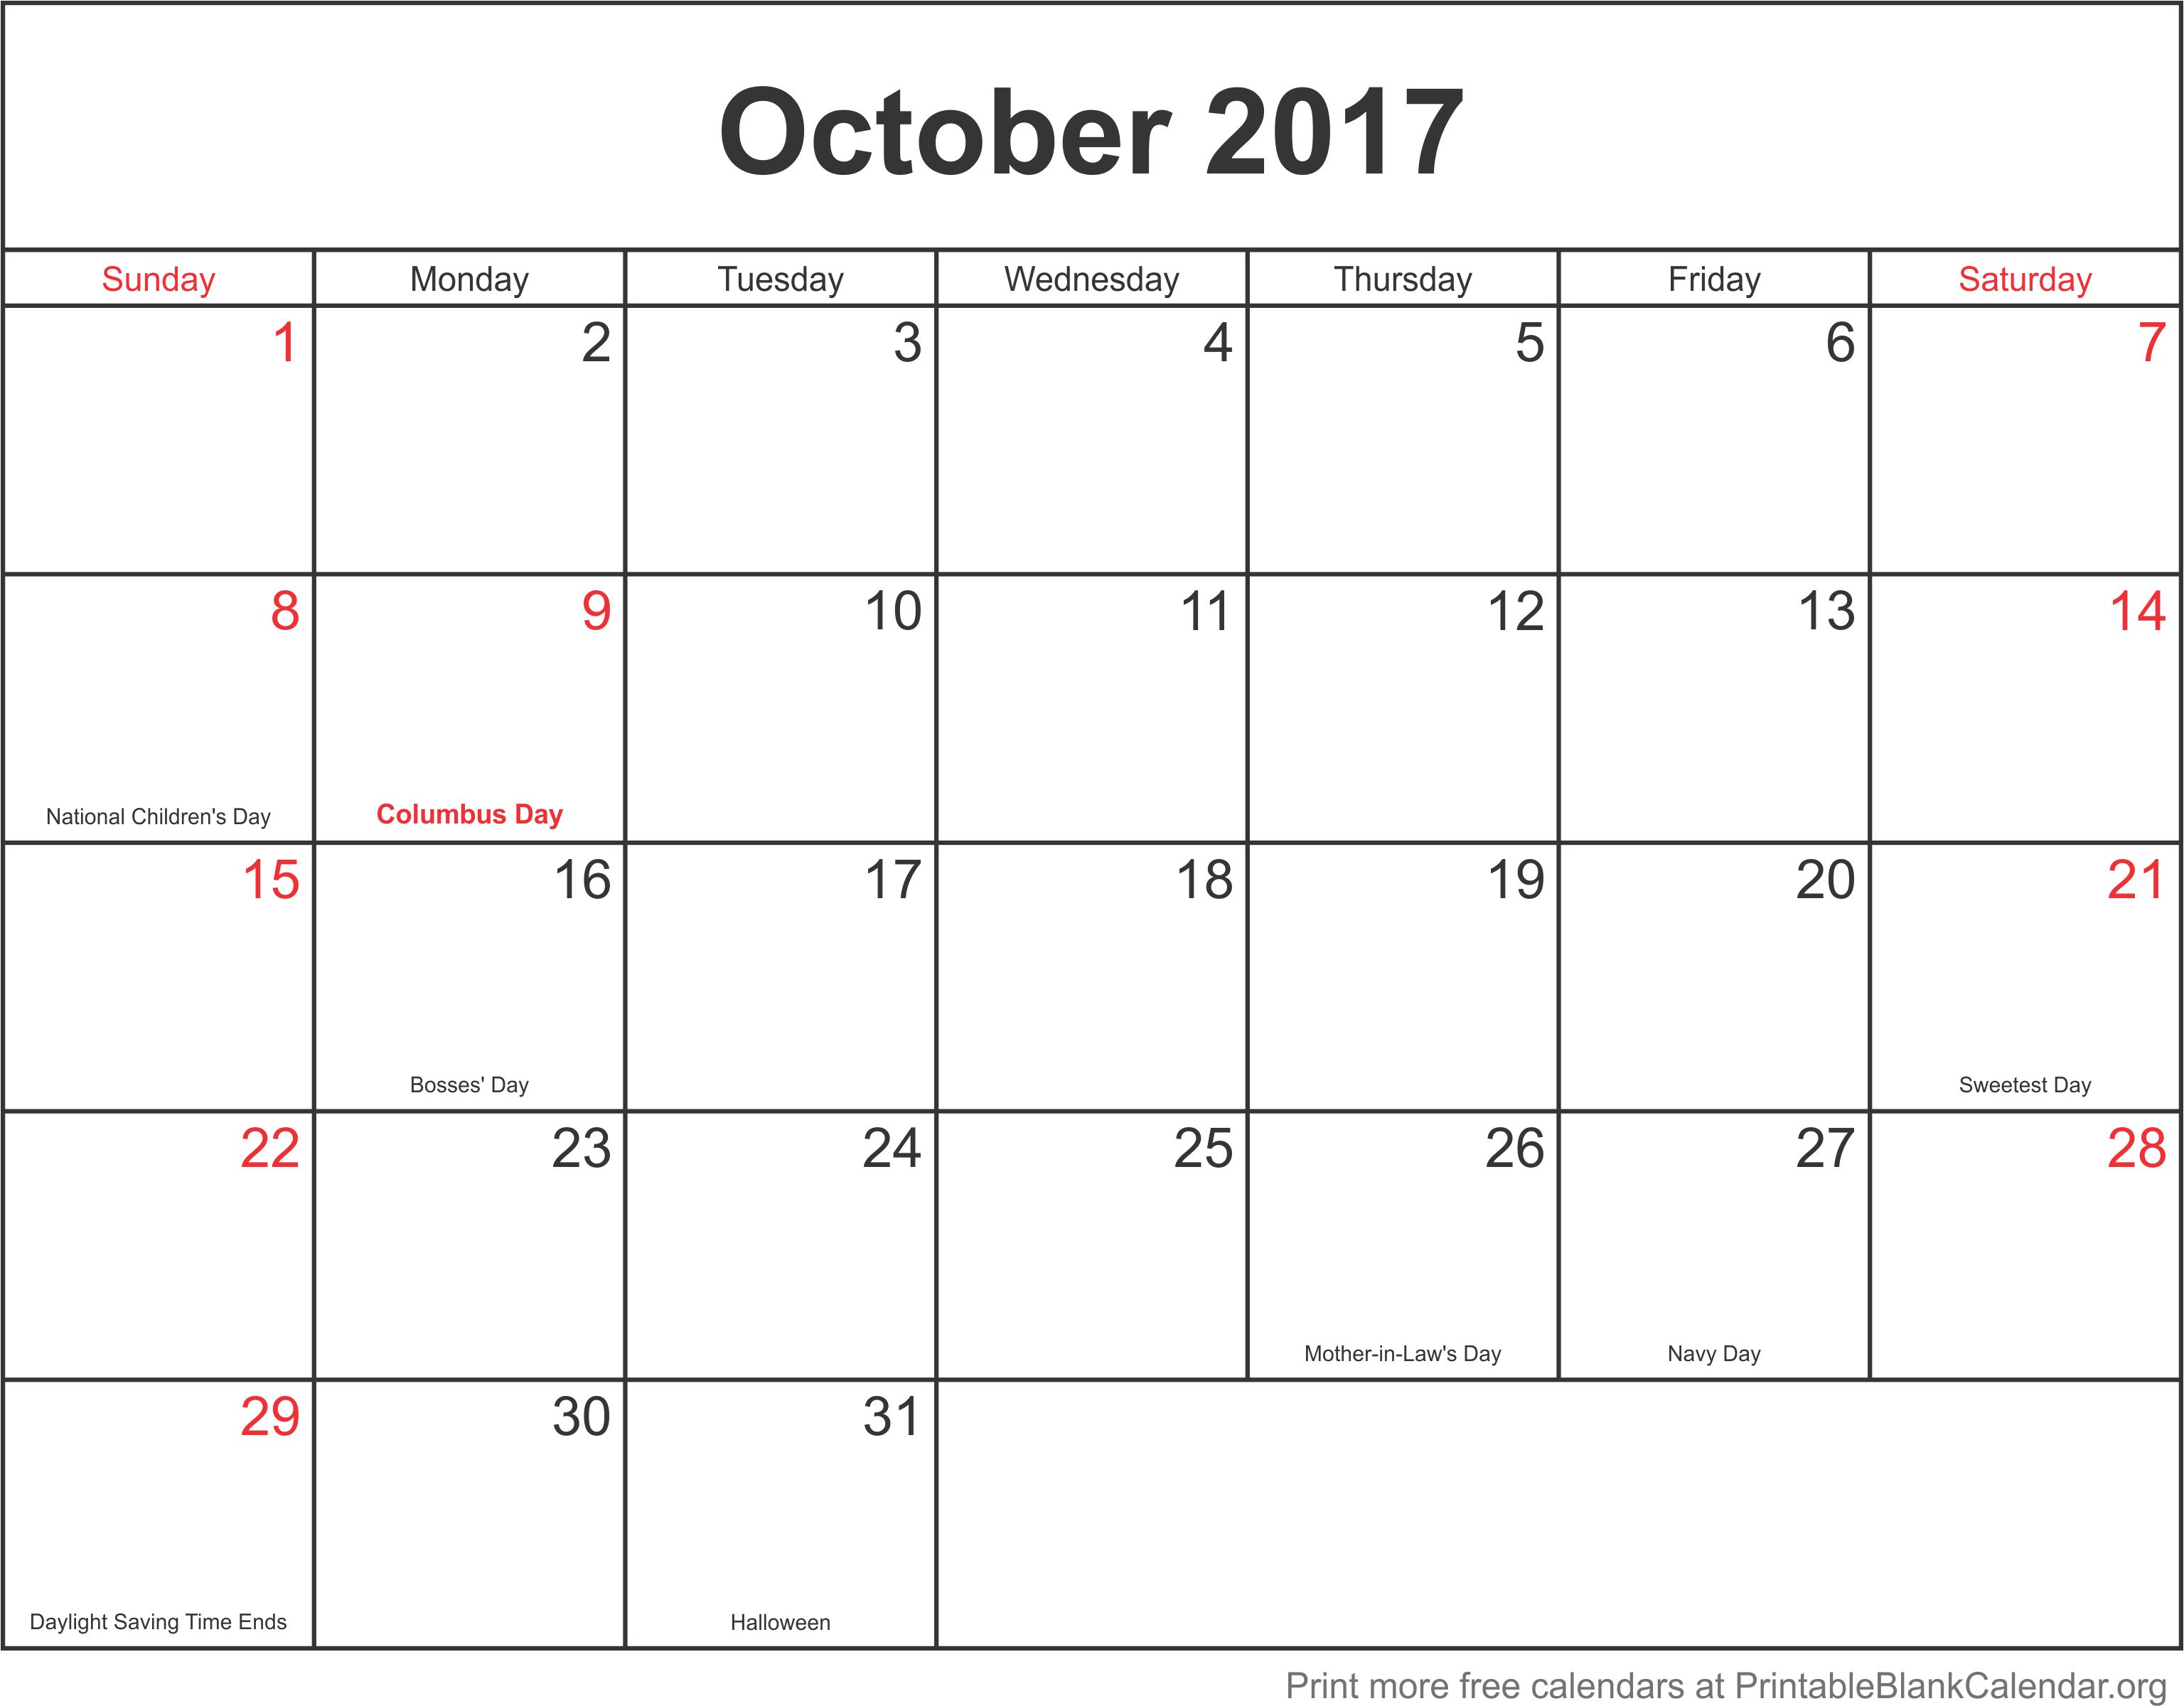 october-2017-free-printable-calendar-printable-blank-calendar